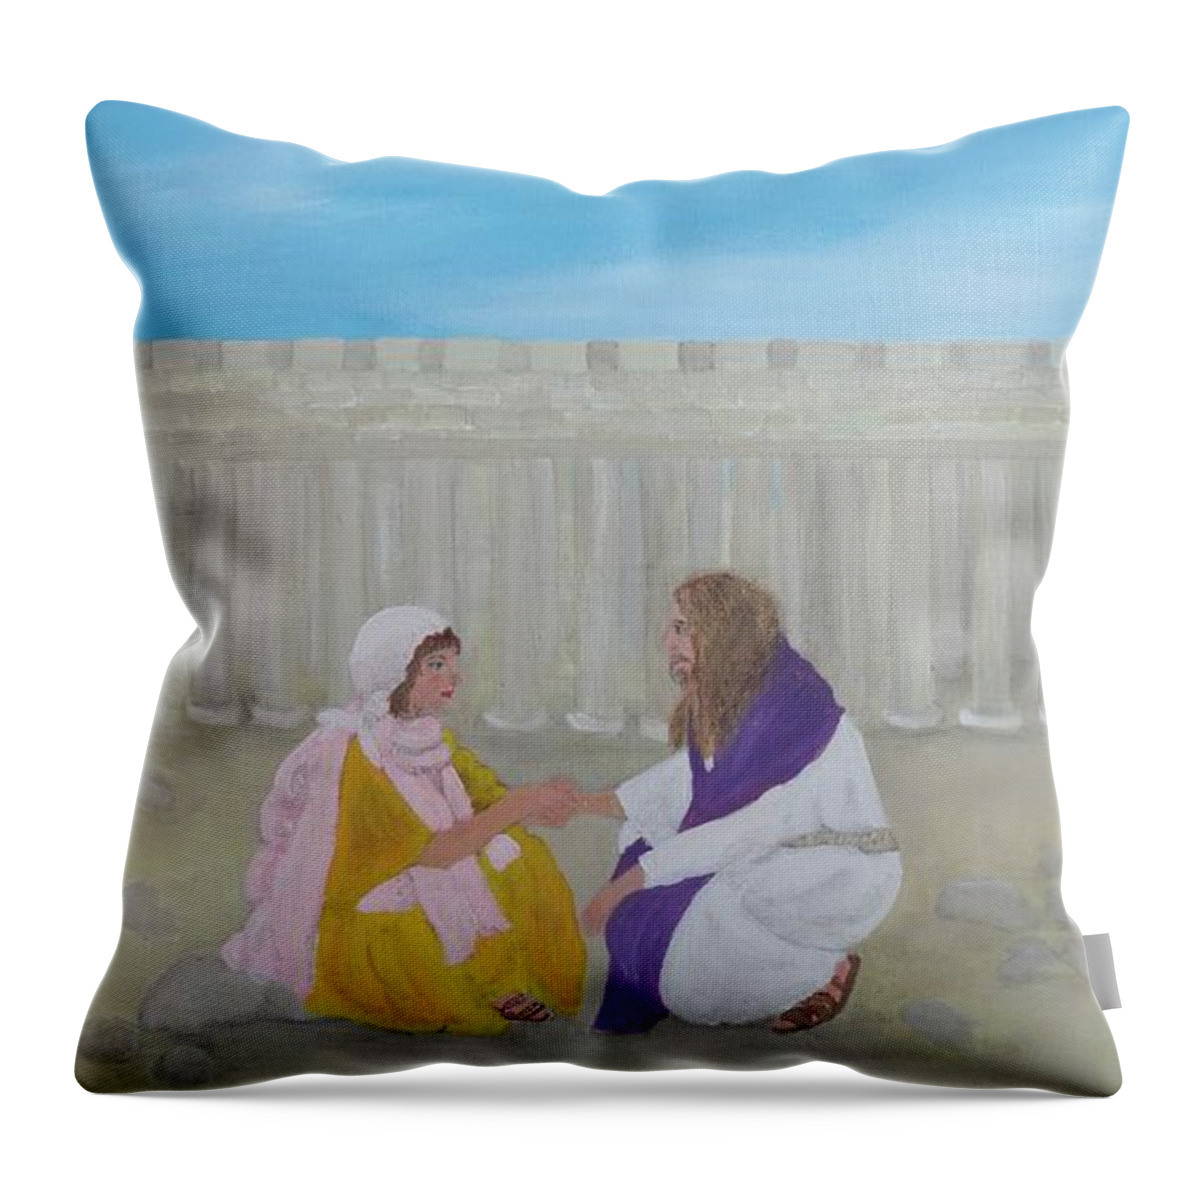 Jesus Throw Pillow featuring the painting Unconditional Love by Karen Jane Jones